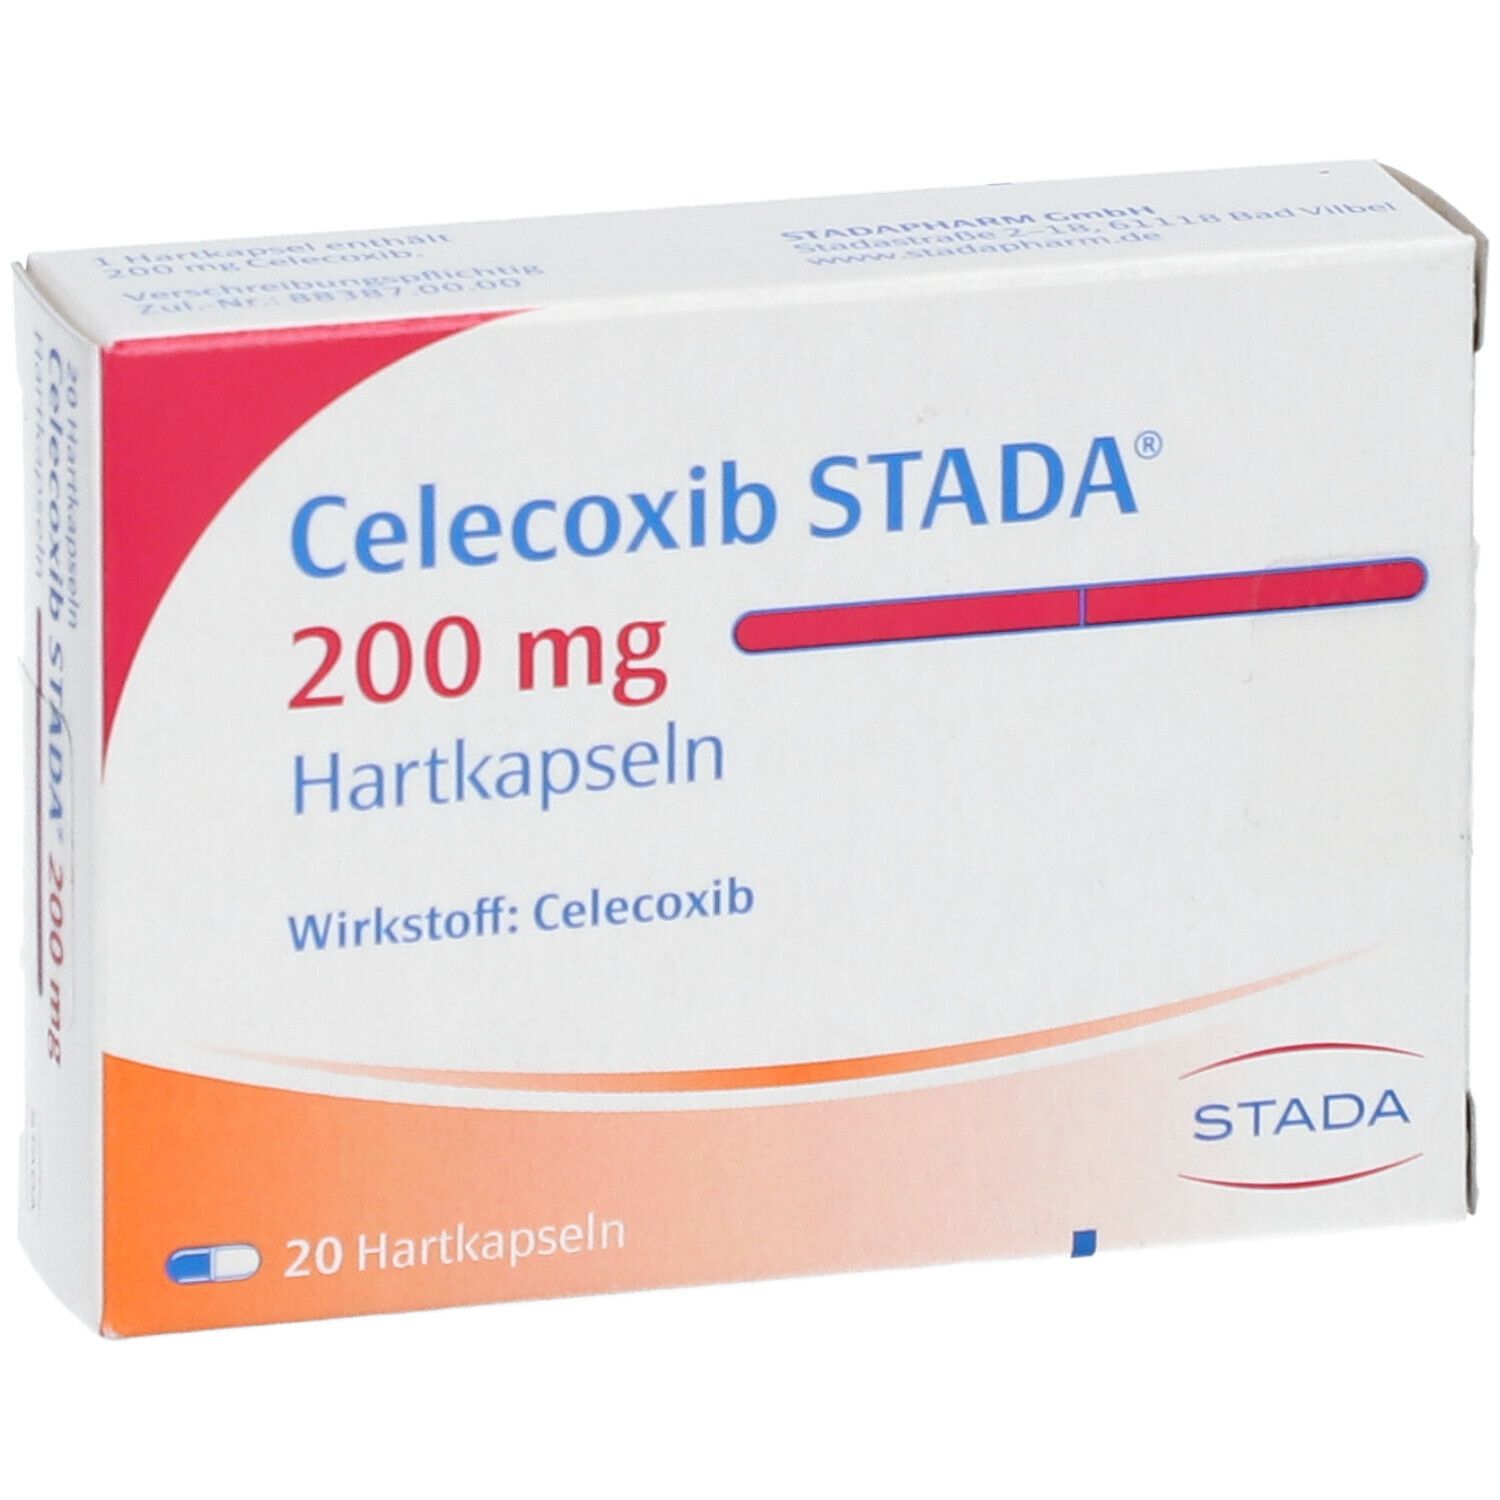 Celecoxib STADA® 200 mg